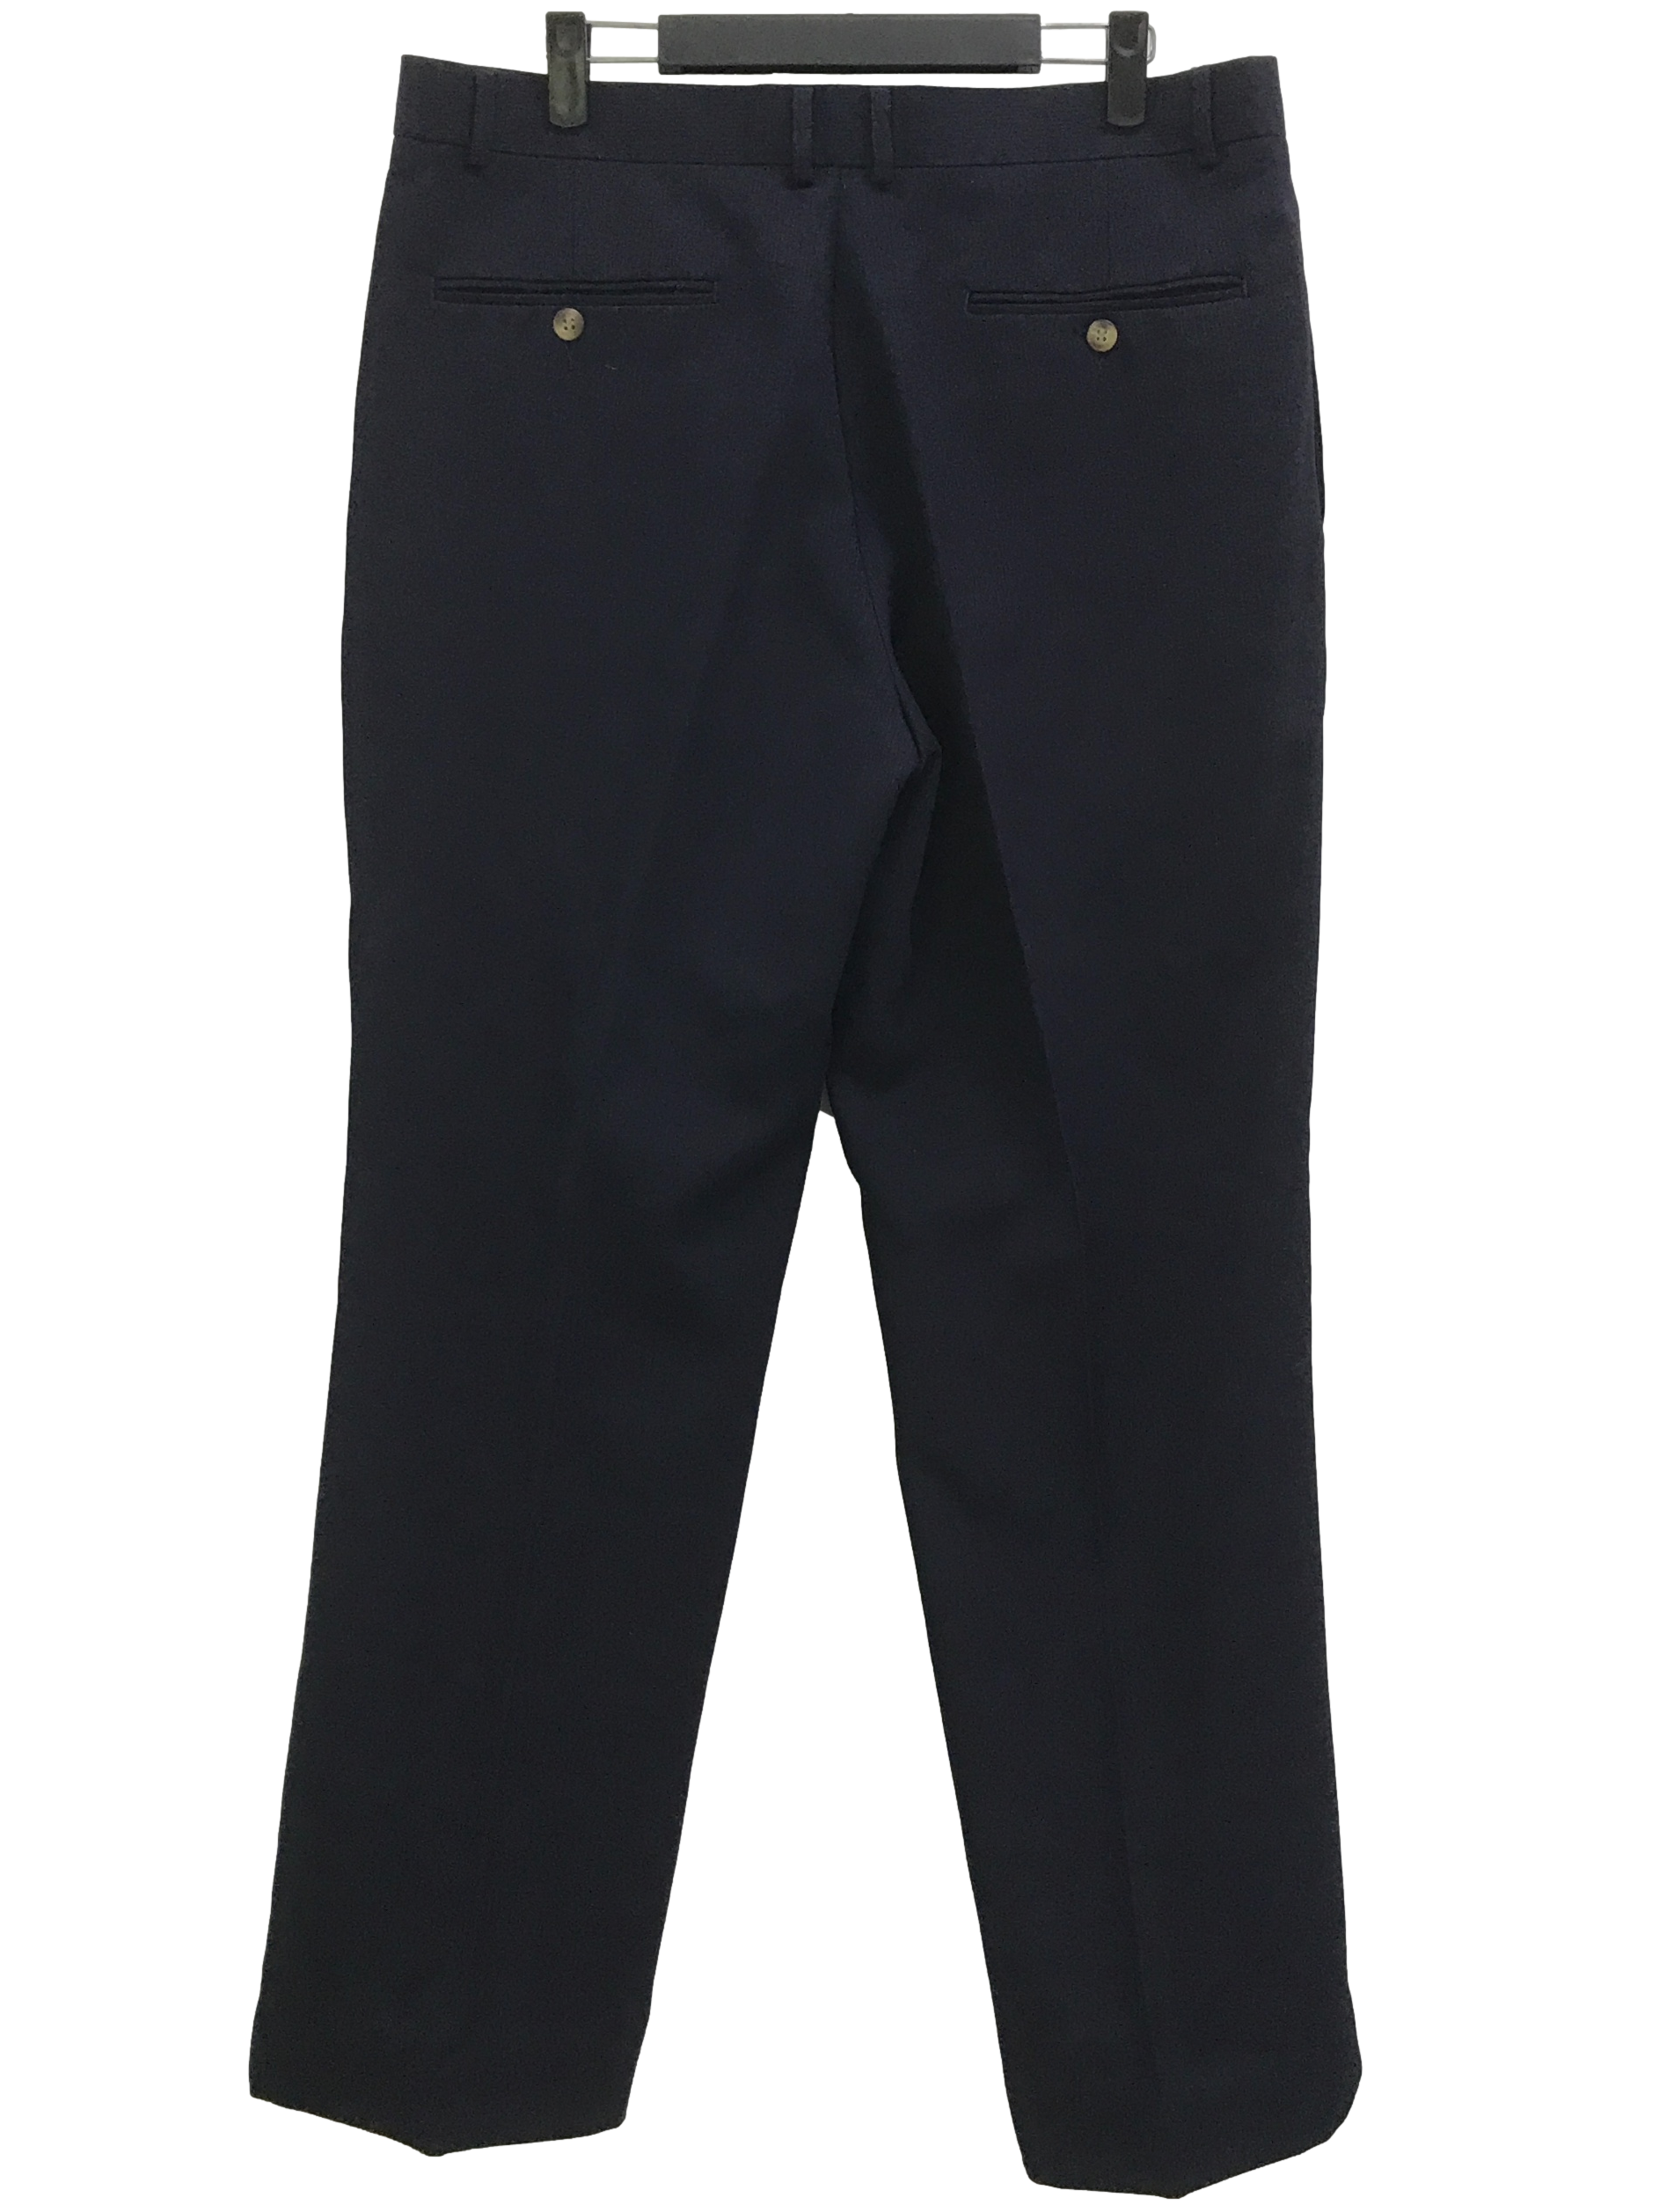 Navy Blue Textured Pants